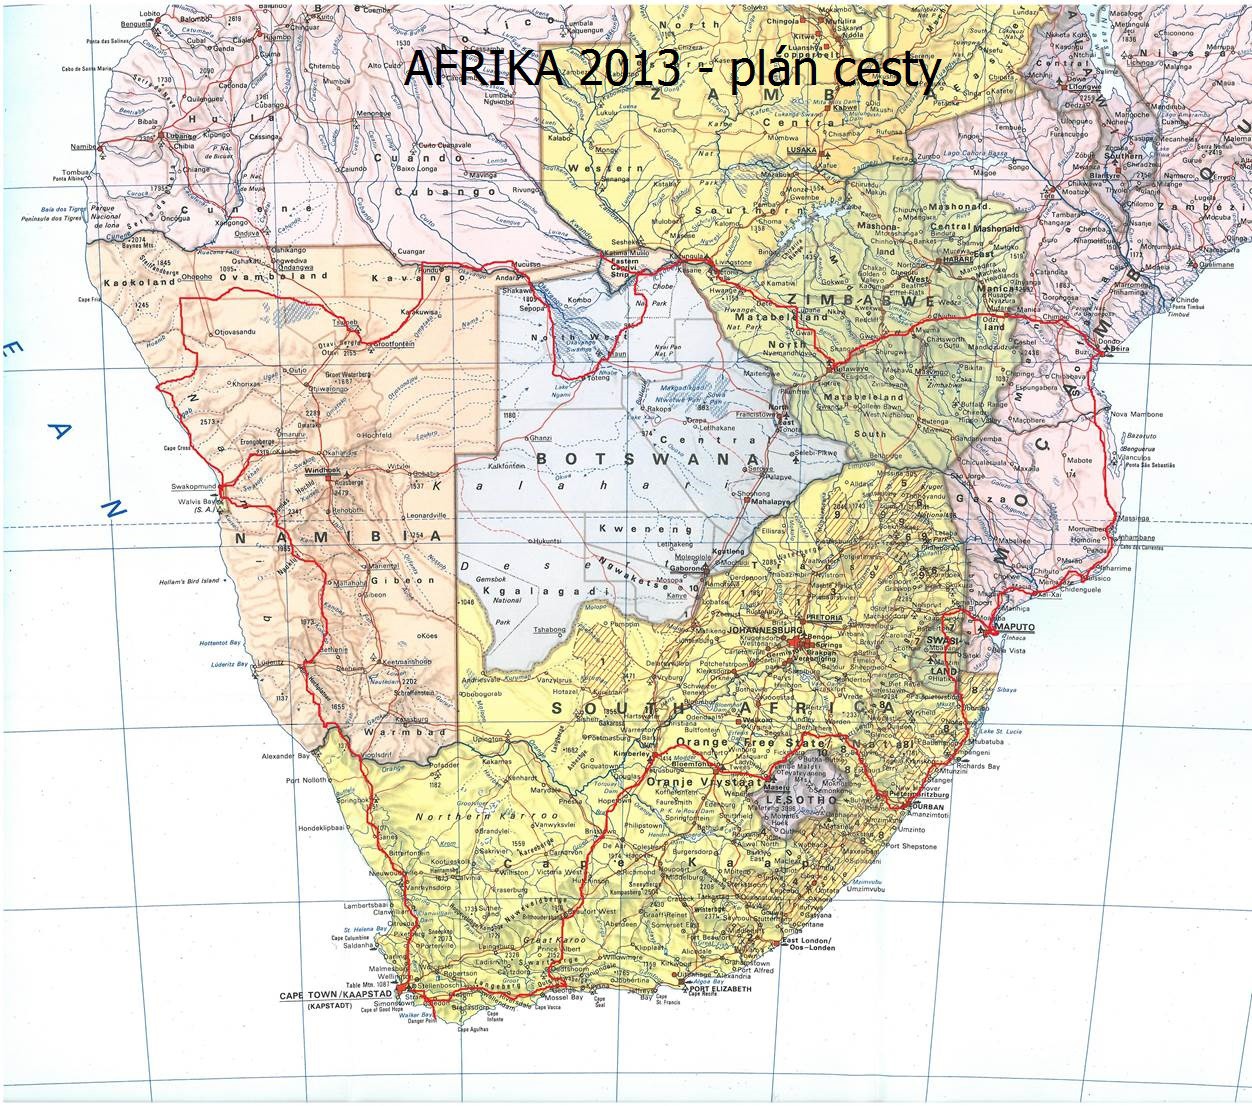 hartl-afrika-2013---plan-cesty-verze-04062013.jpg